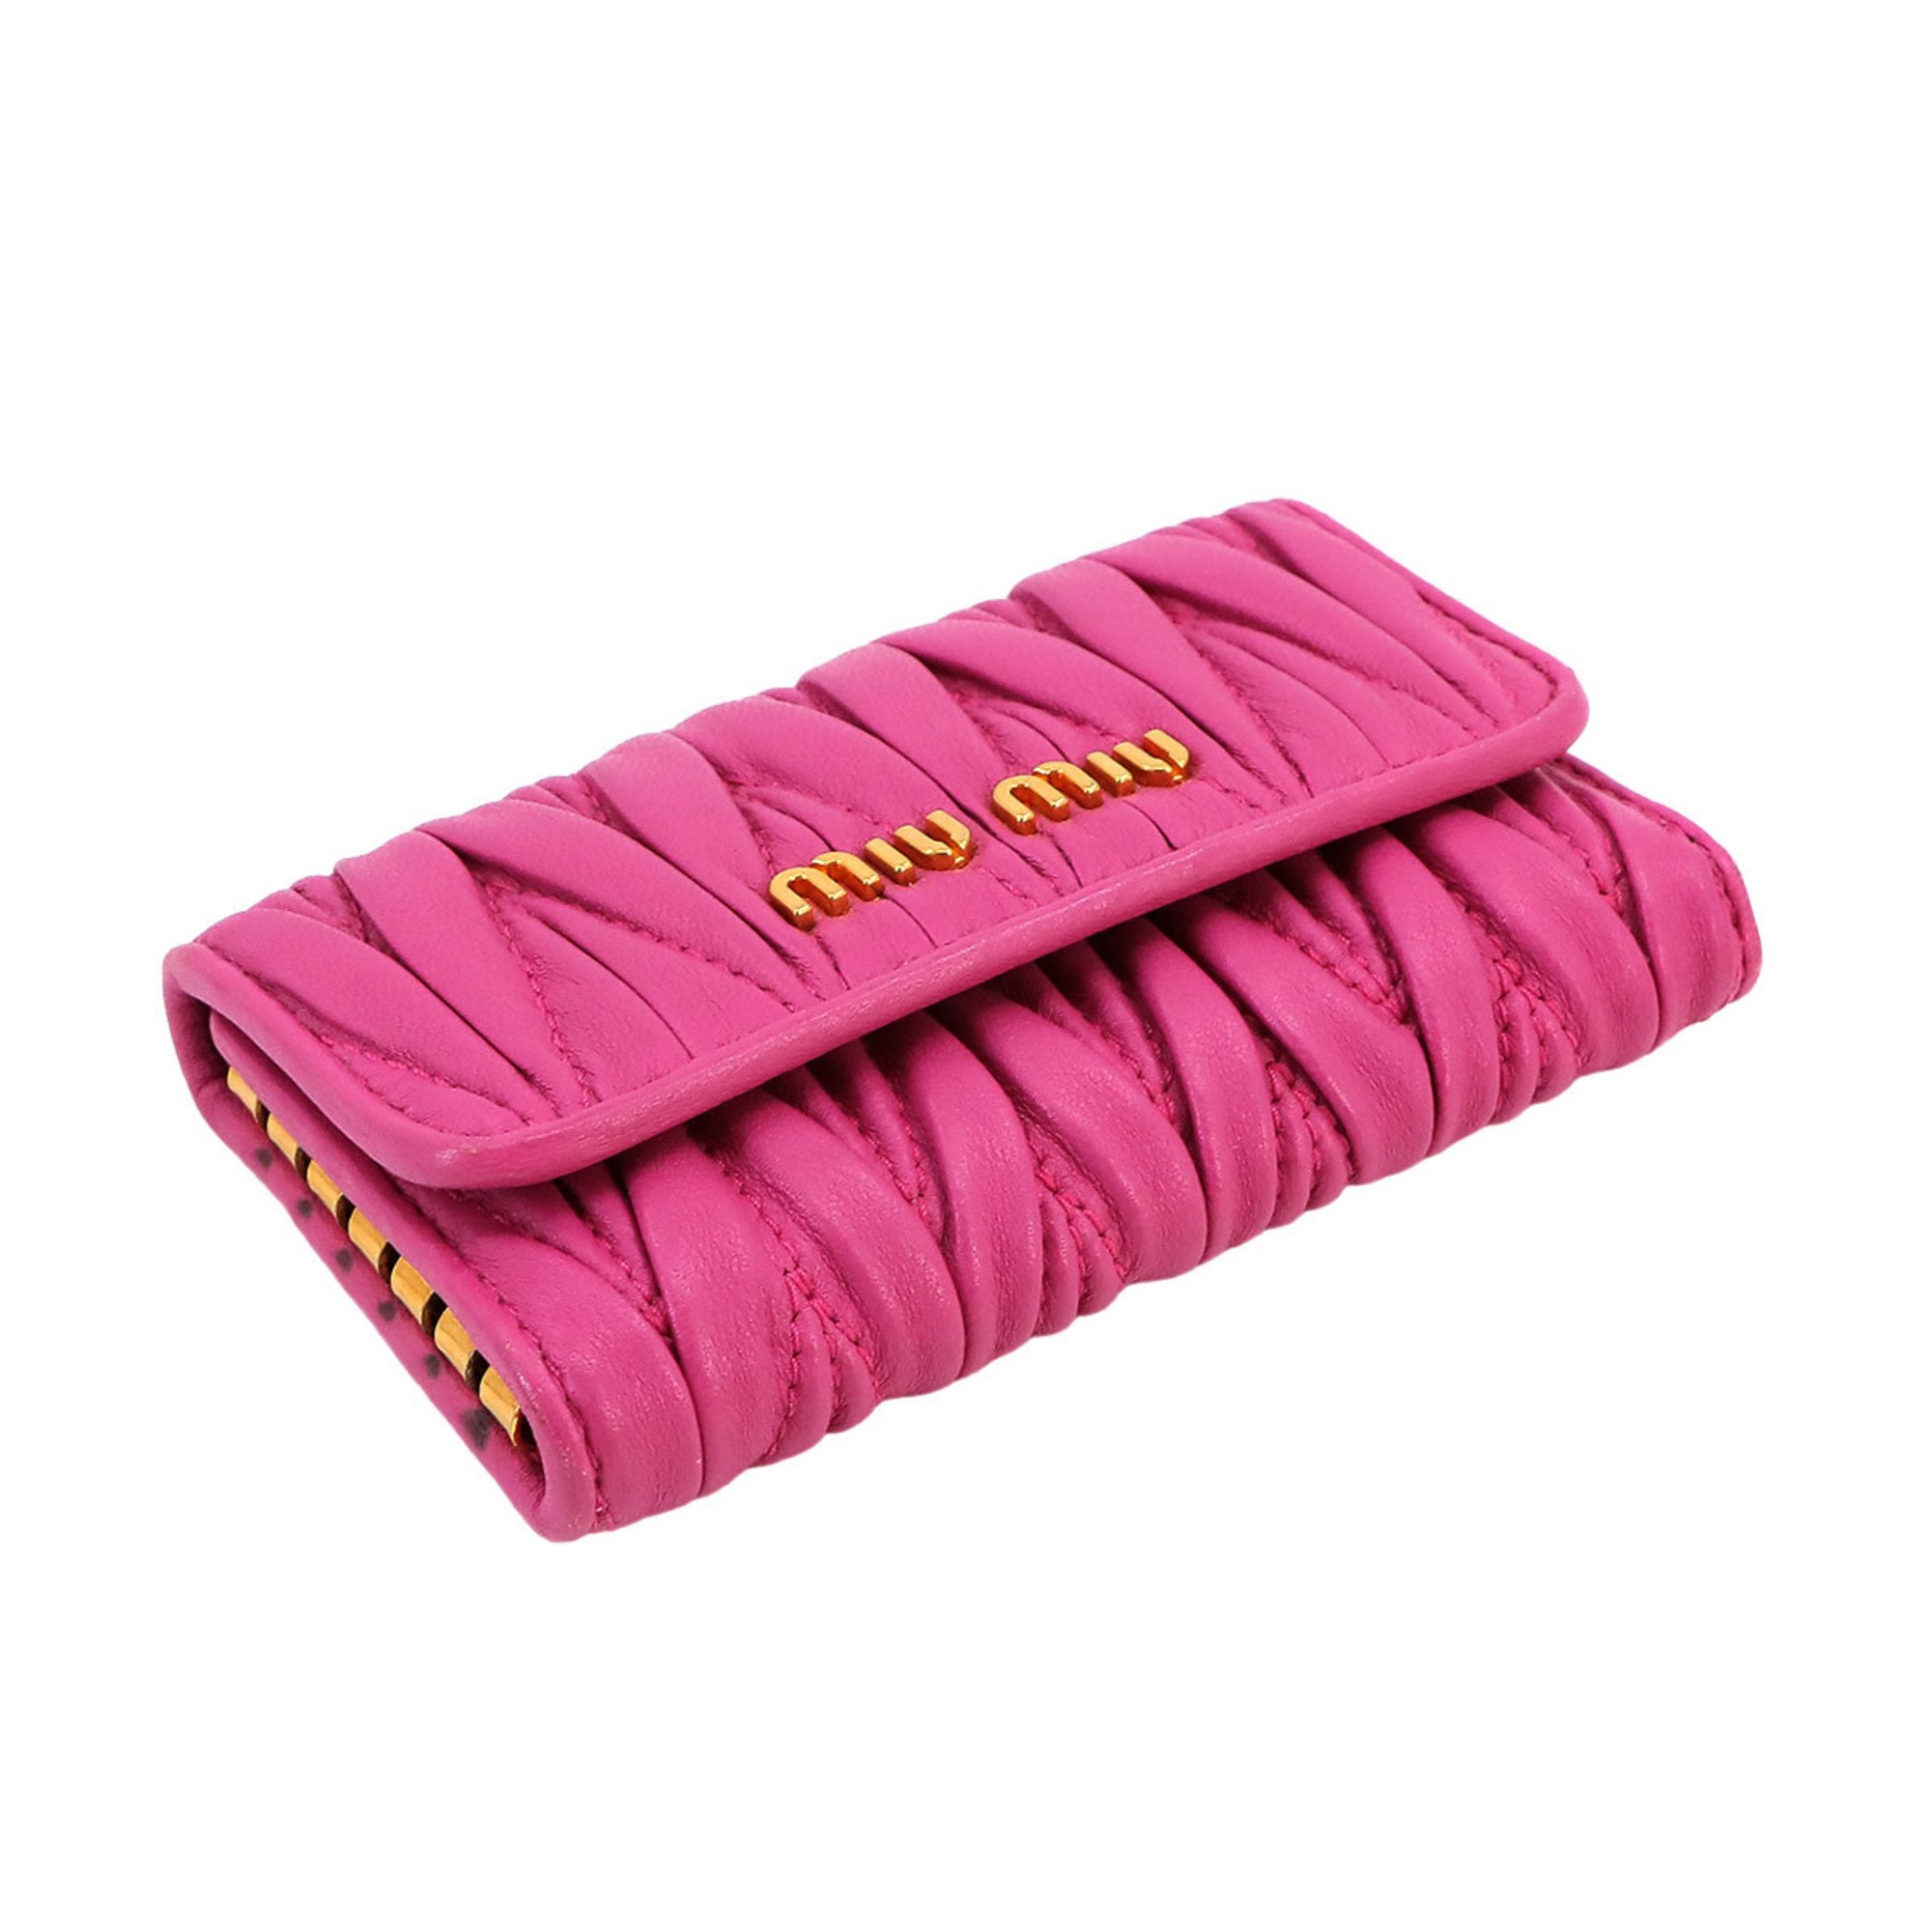 Miu Miu Miu 6-ring key case in matelasse leather, fuchsia pink 5M0222, gold hardware